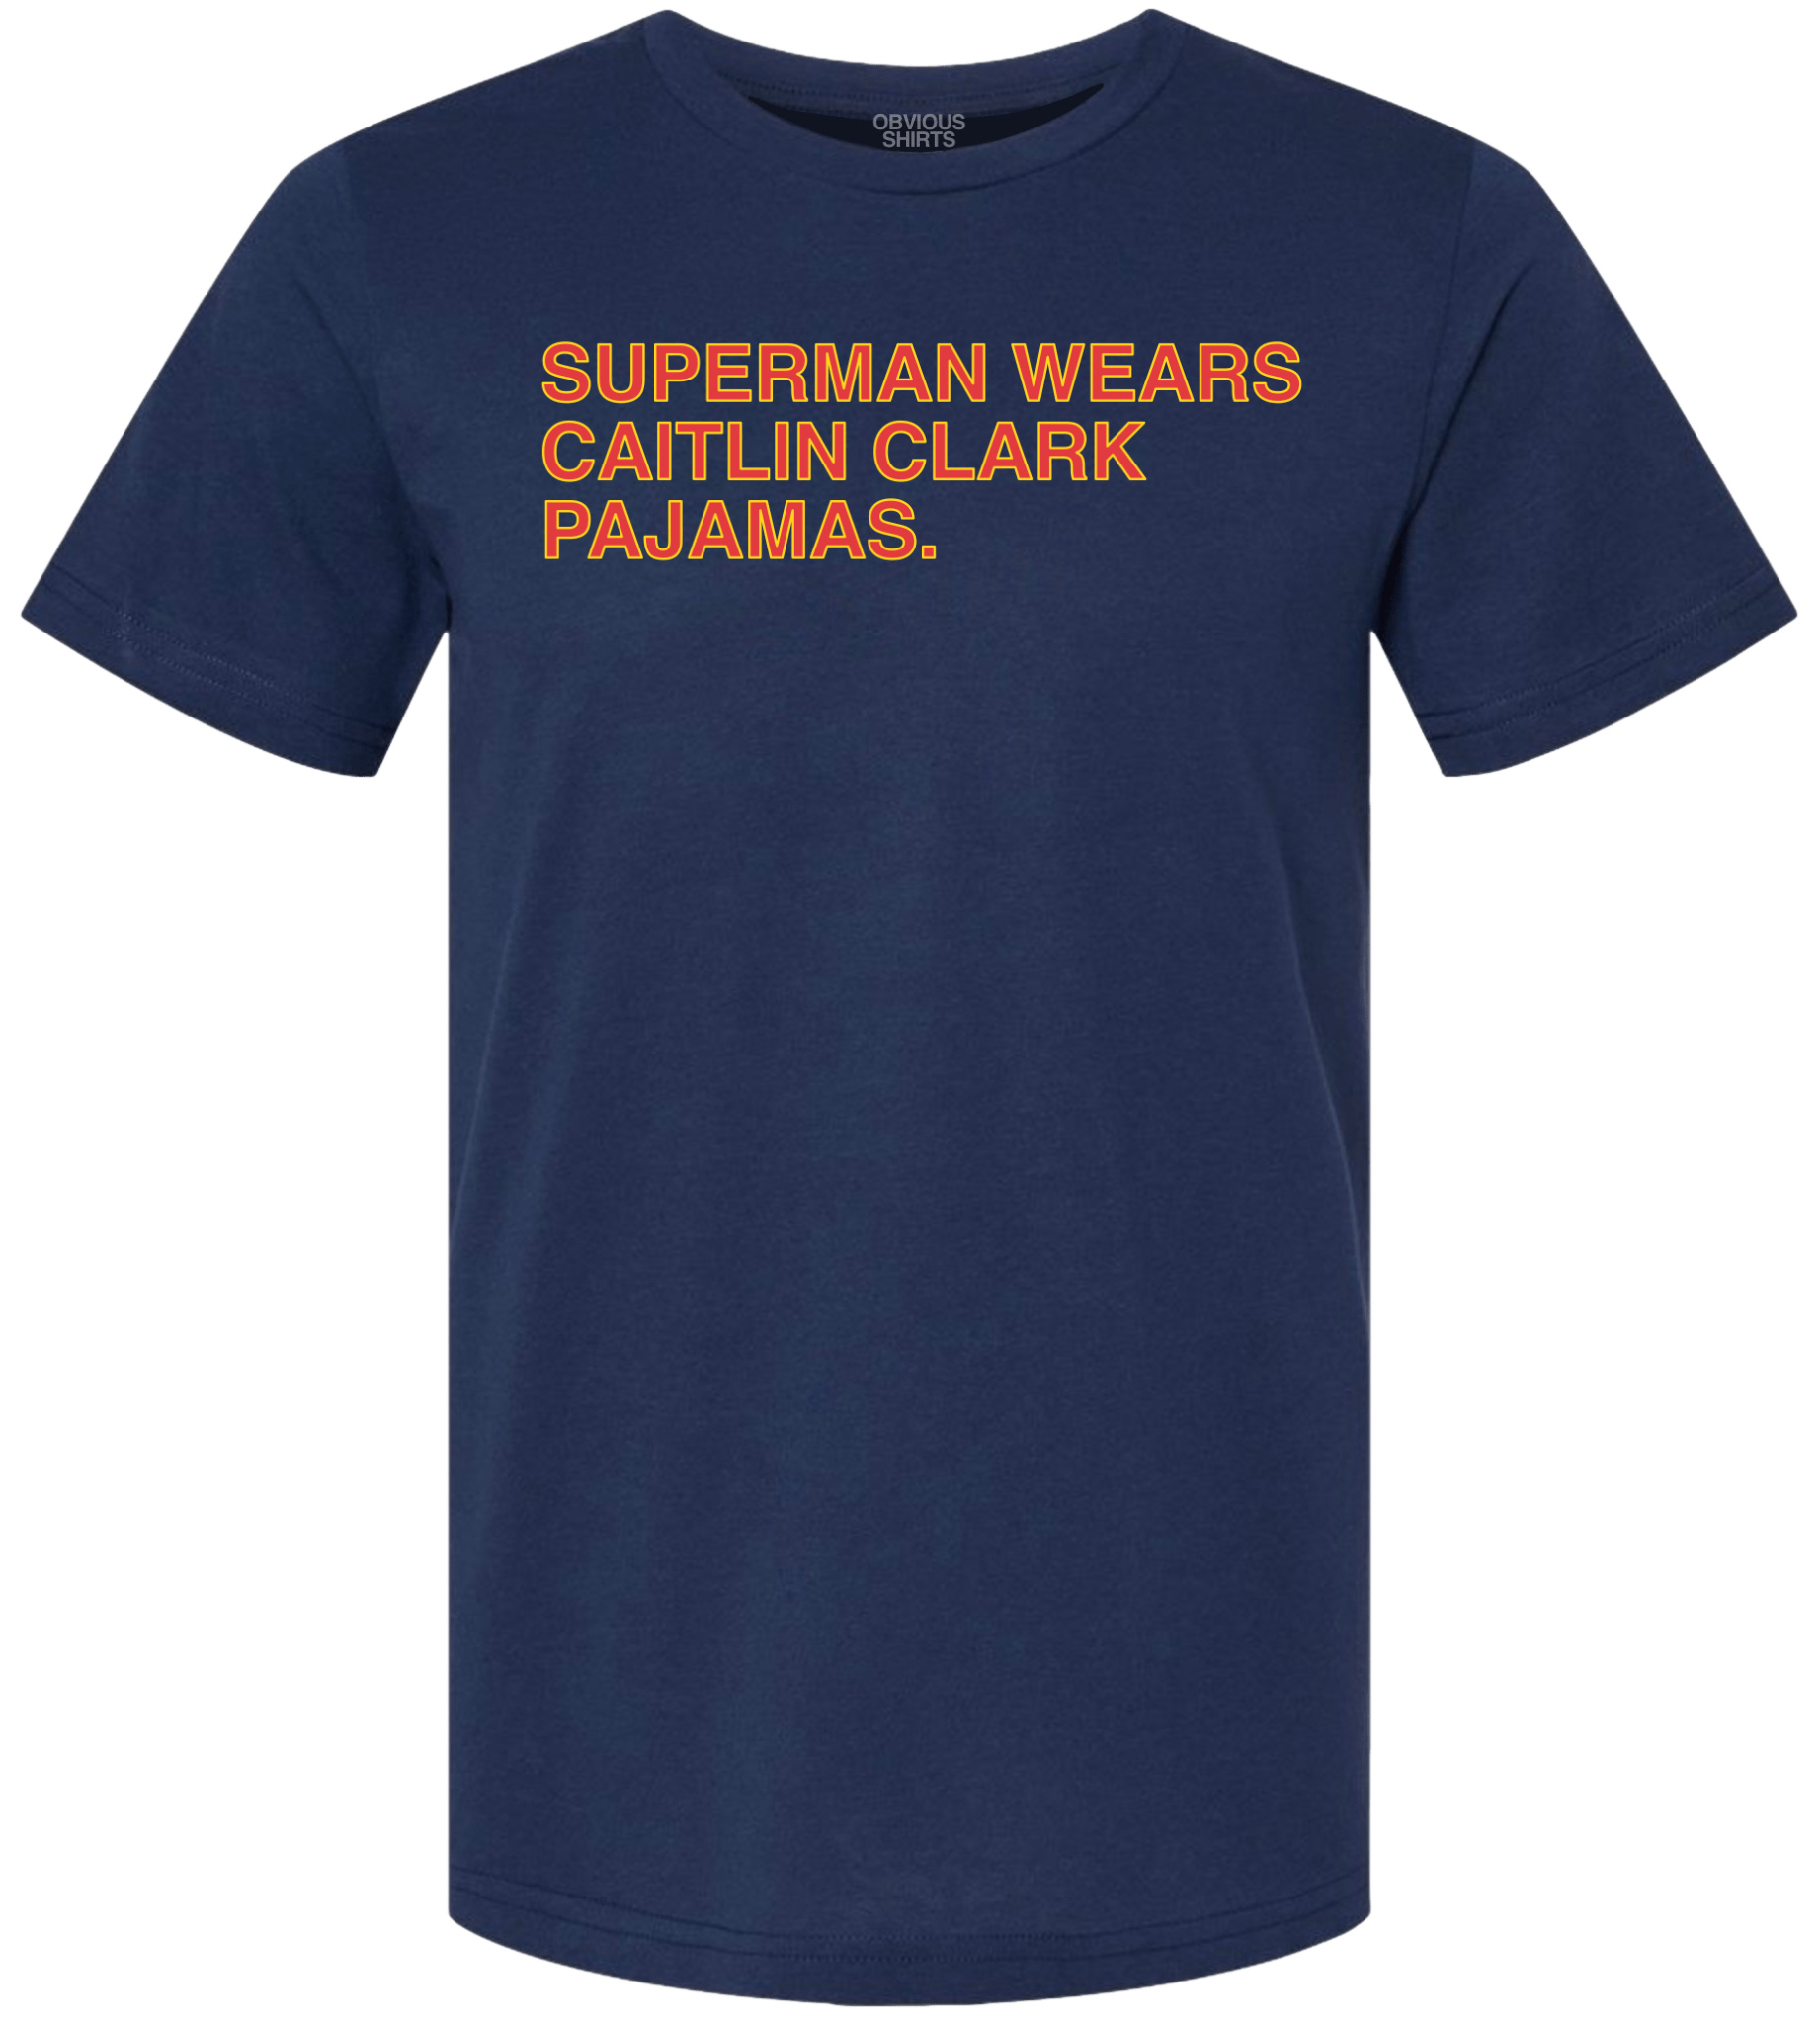 SUPERMAN WEARS CAITLIN CLARK PAJAMAS. - OBVIOUS SHIRTS